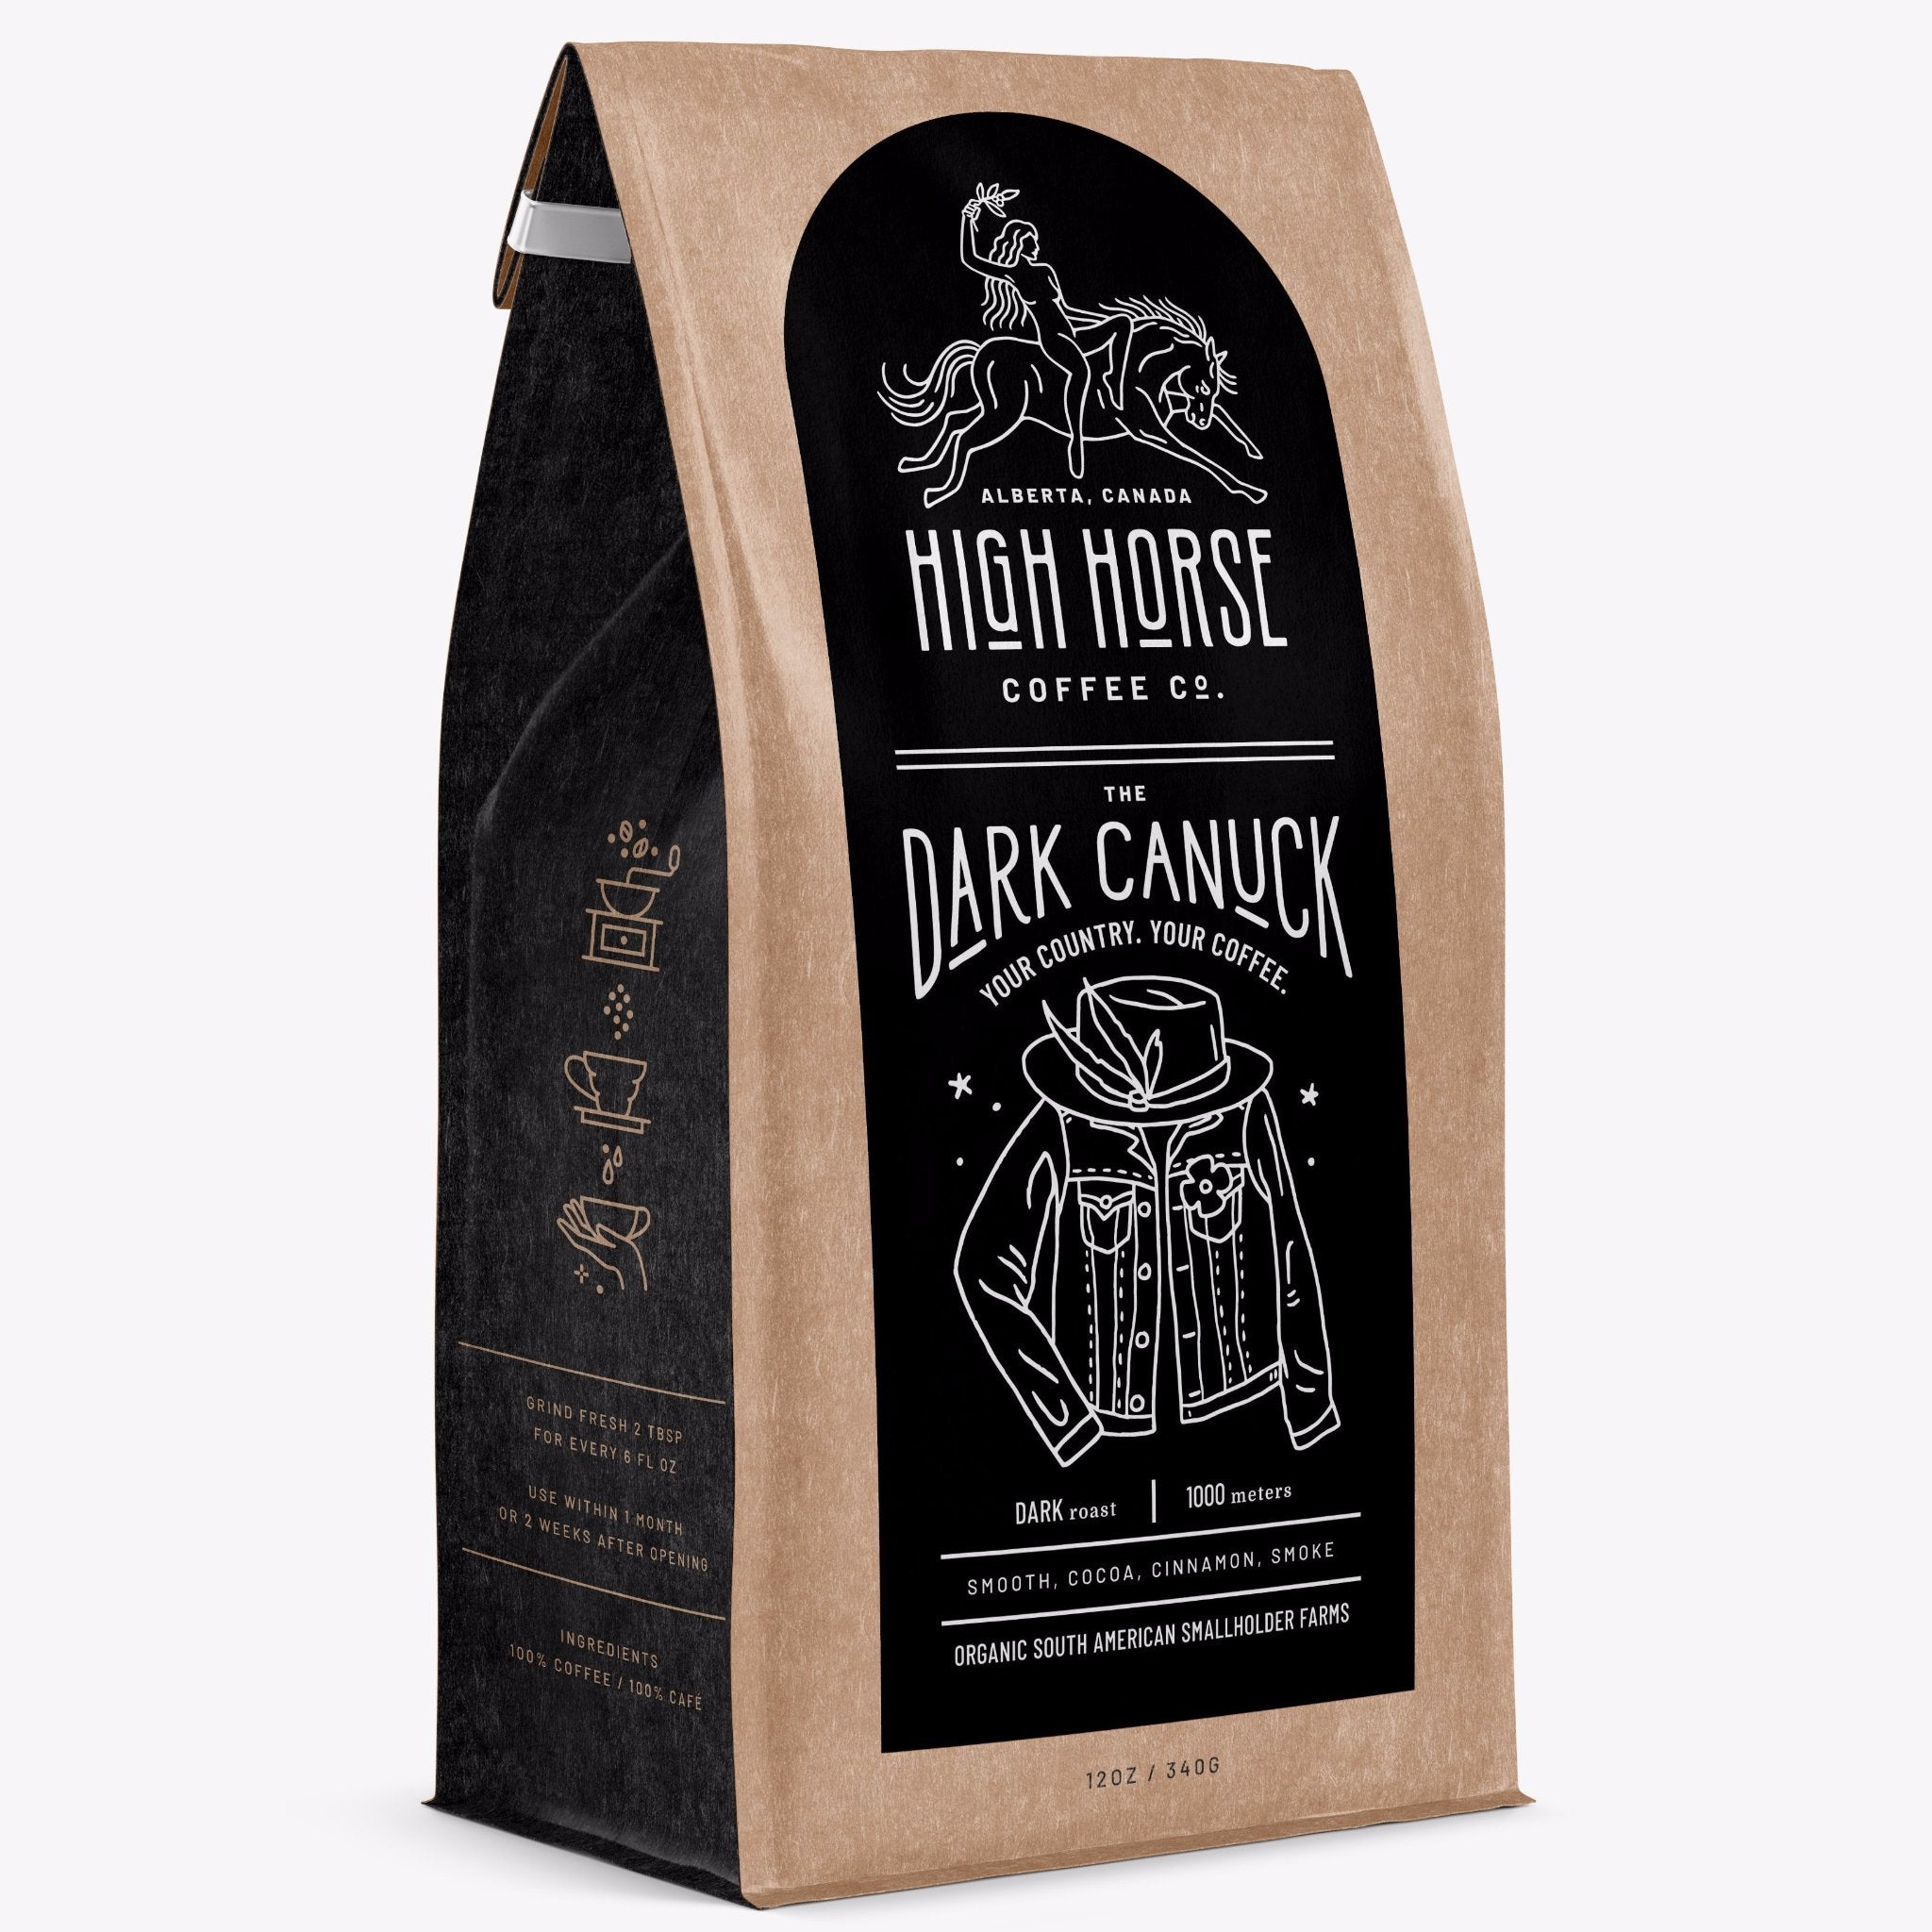 The Dark Canuck - High Horse Coffee Company